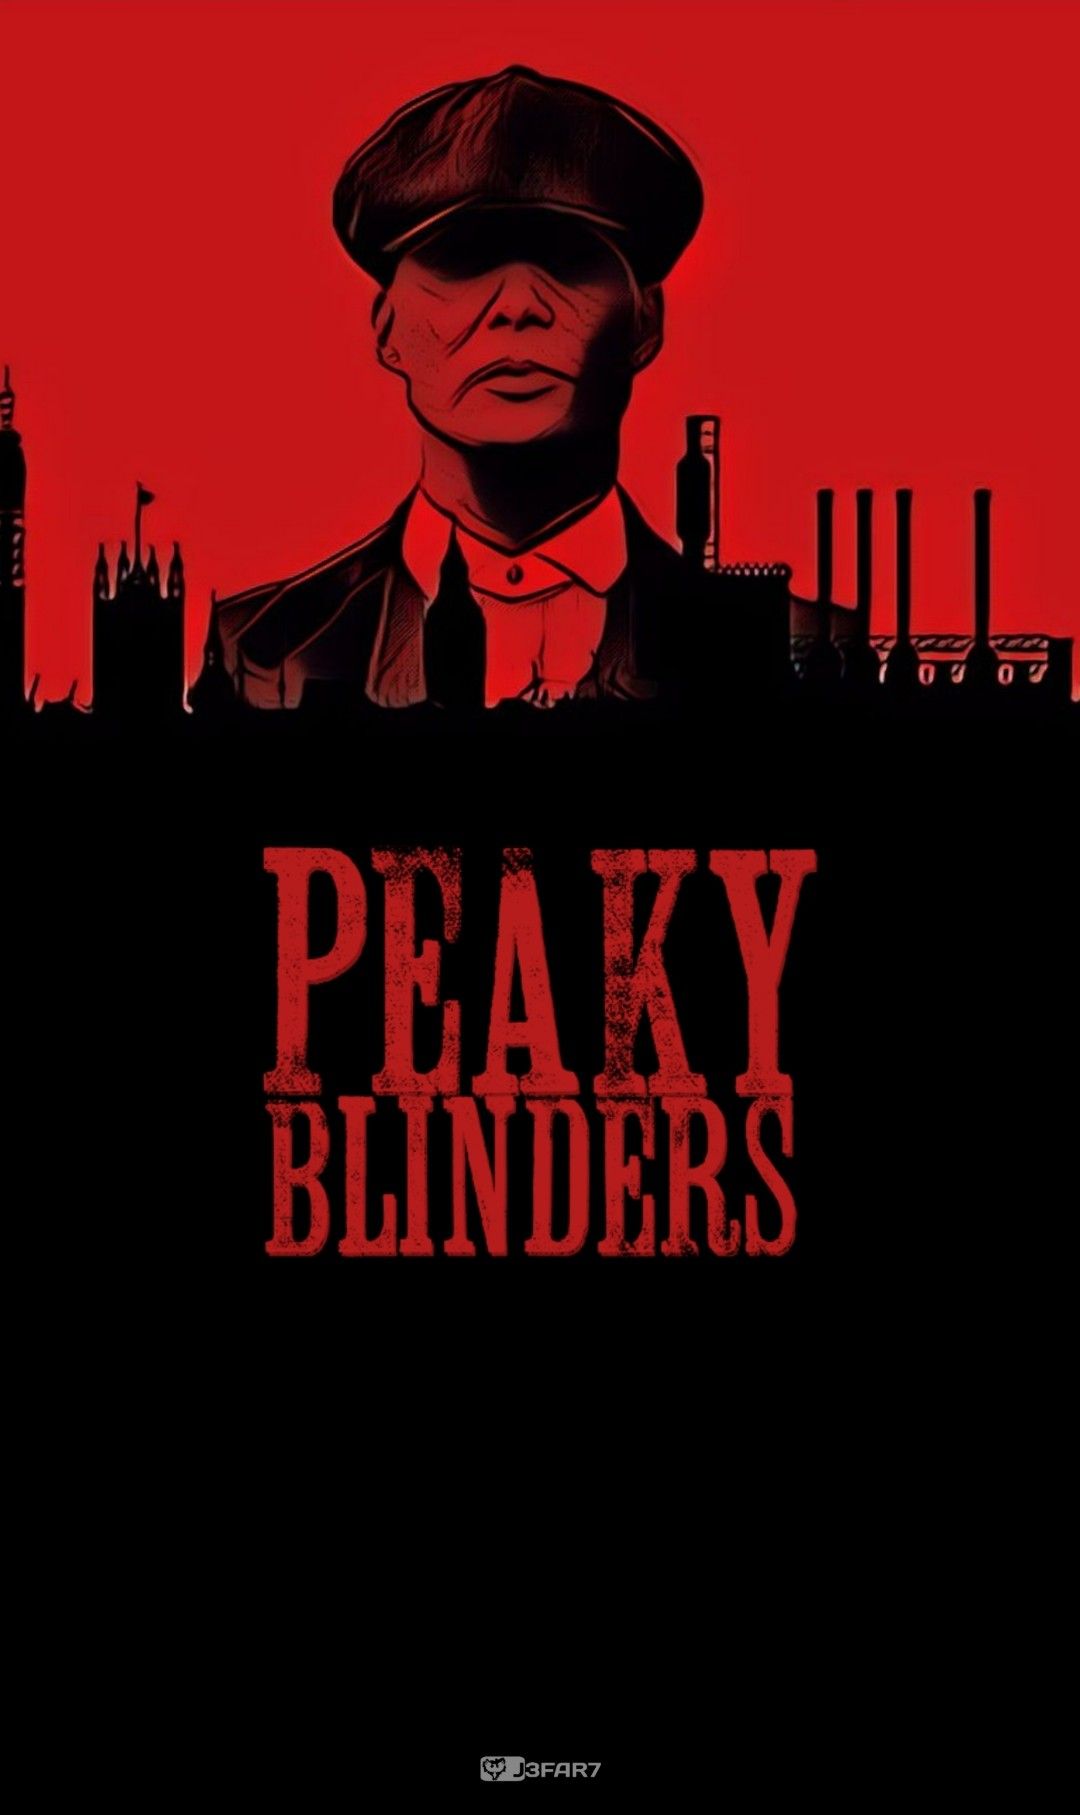 Peaky Blinders Poster Wallpapers - Wallpaper Cave